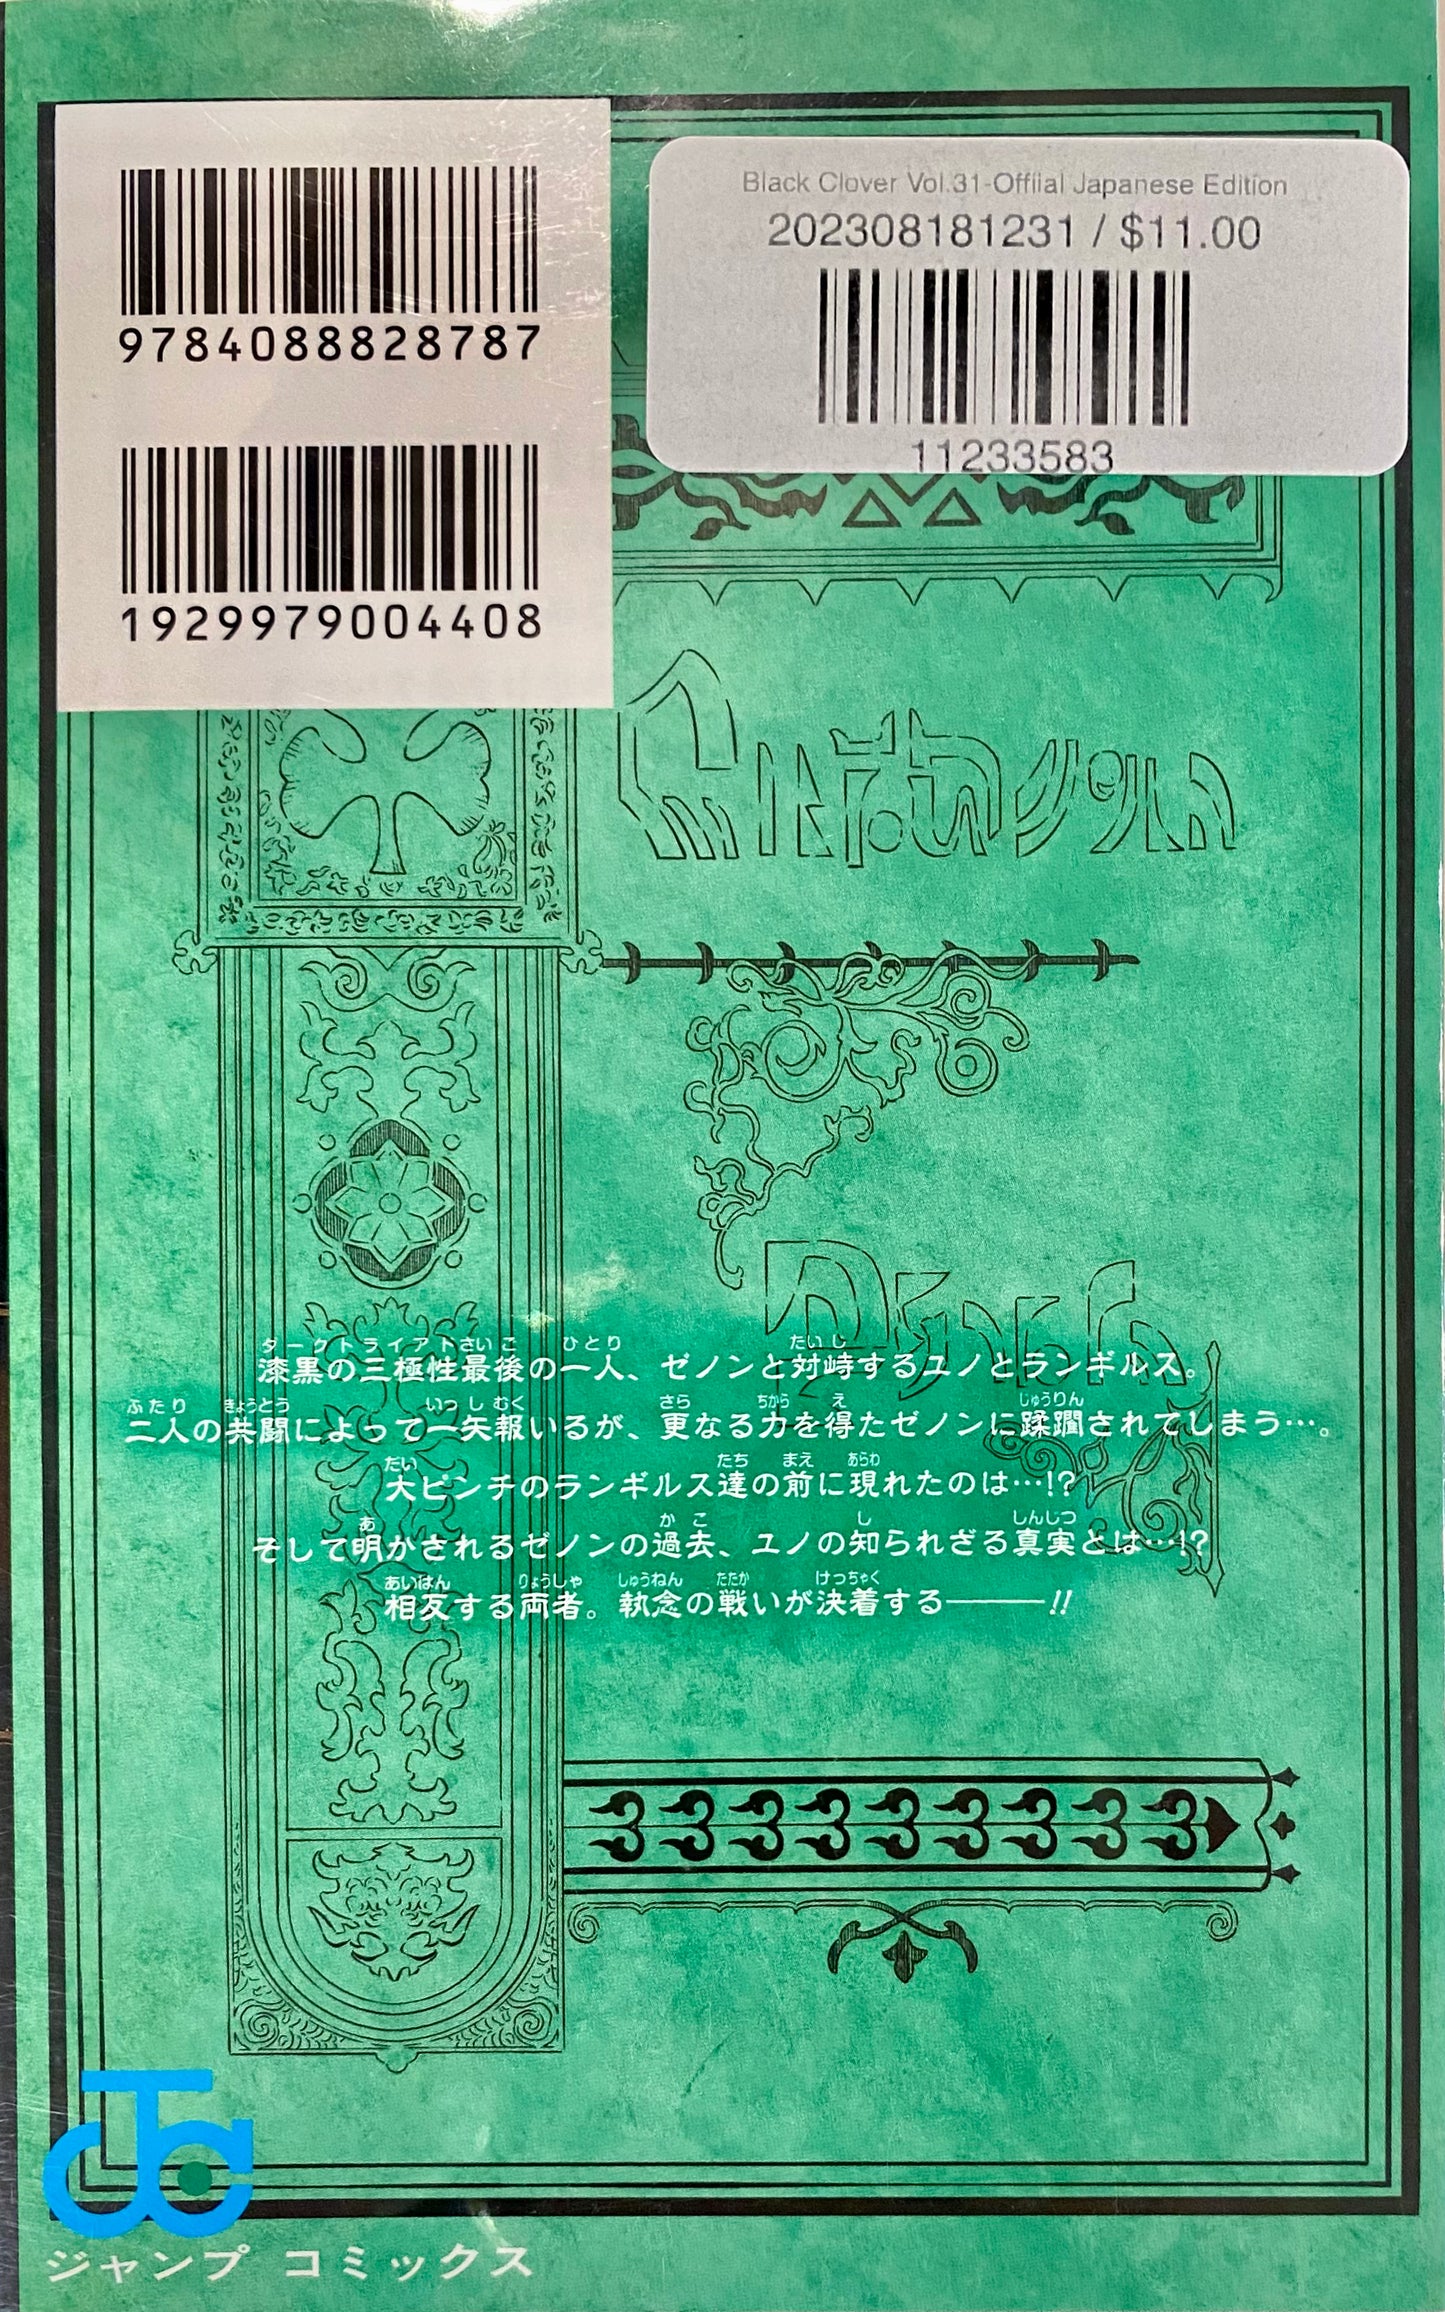 Black Clover Vol.31-Offiial Japanese Edition